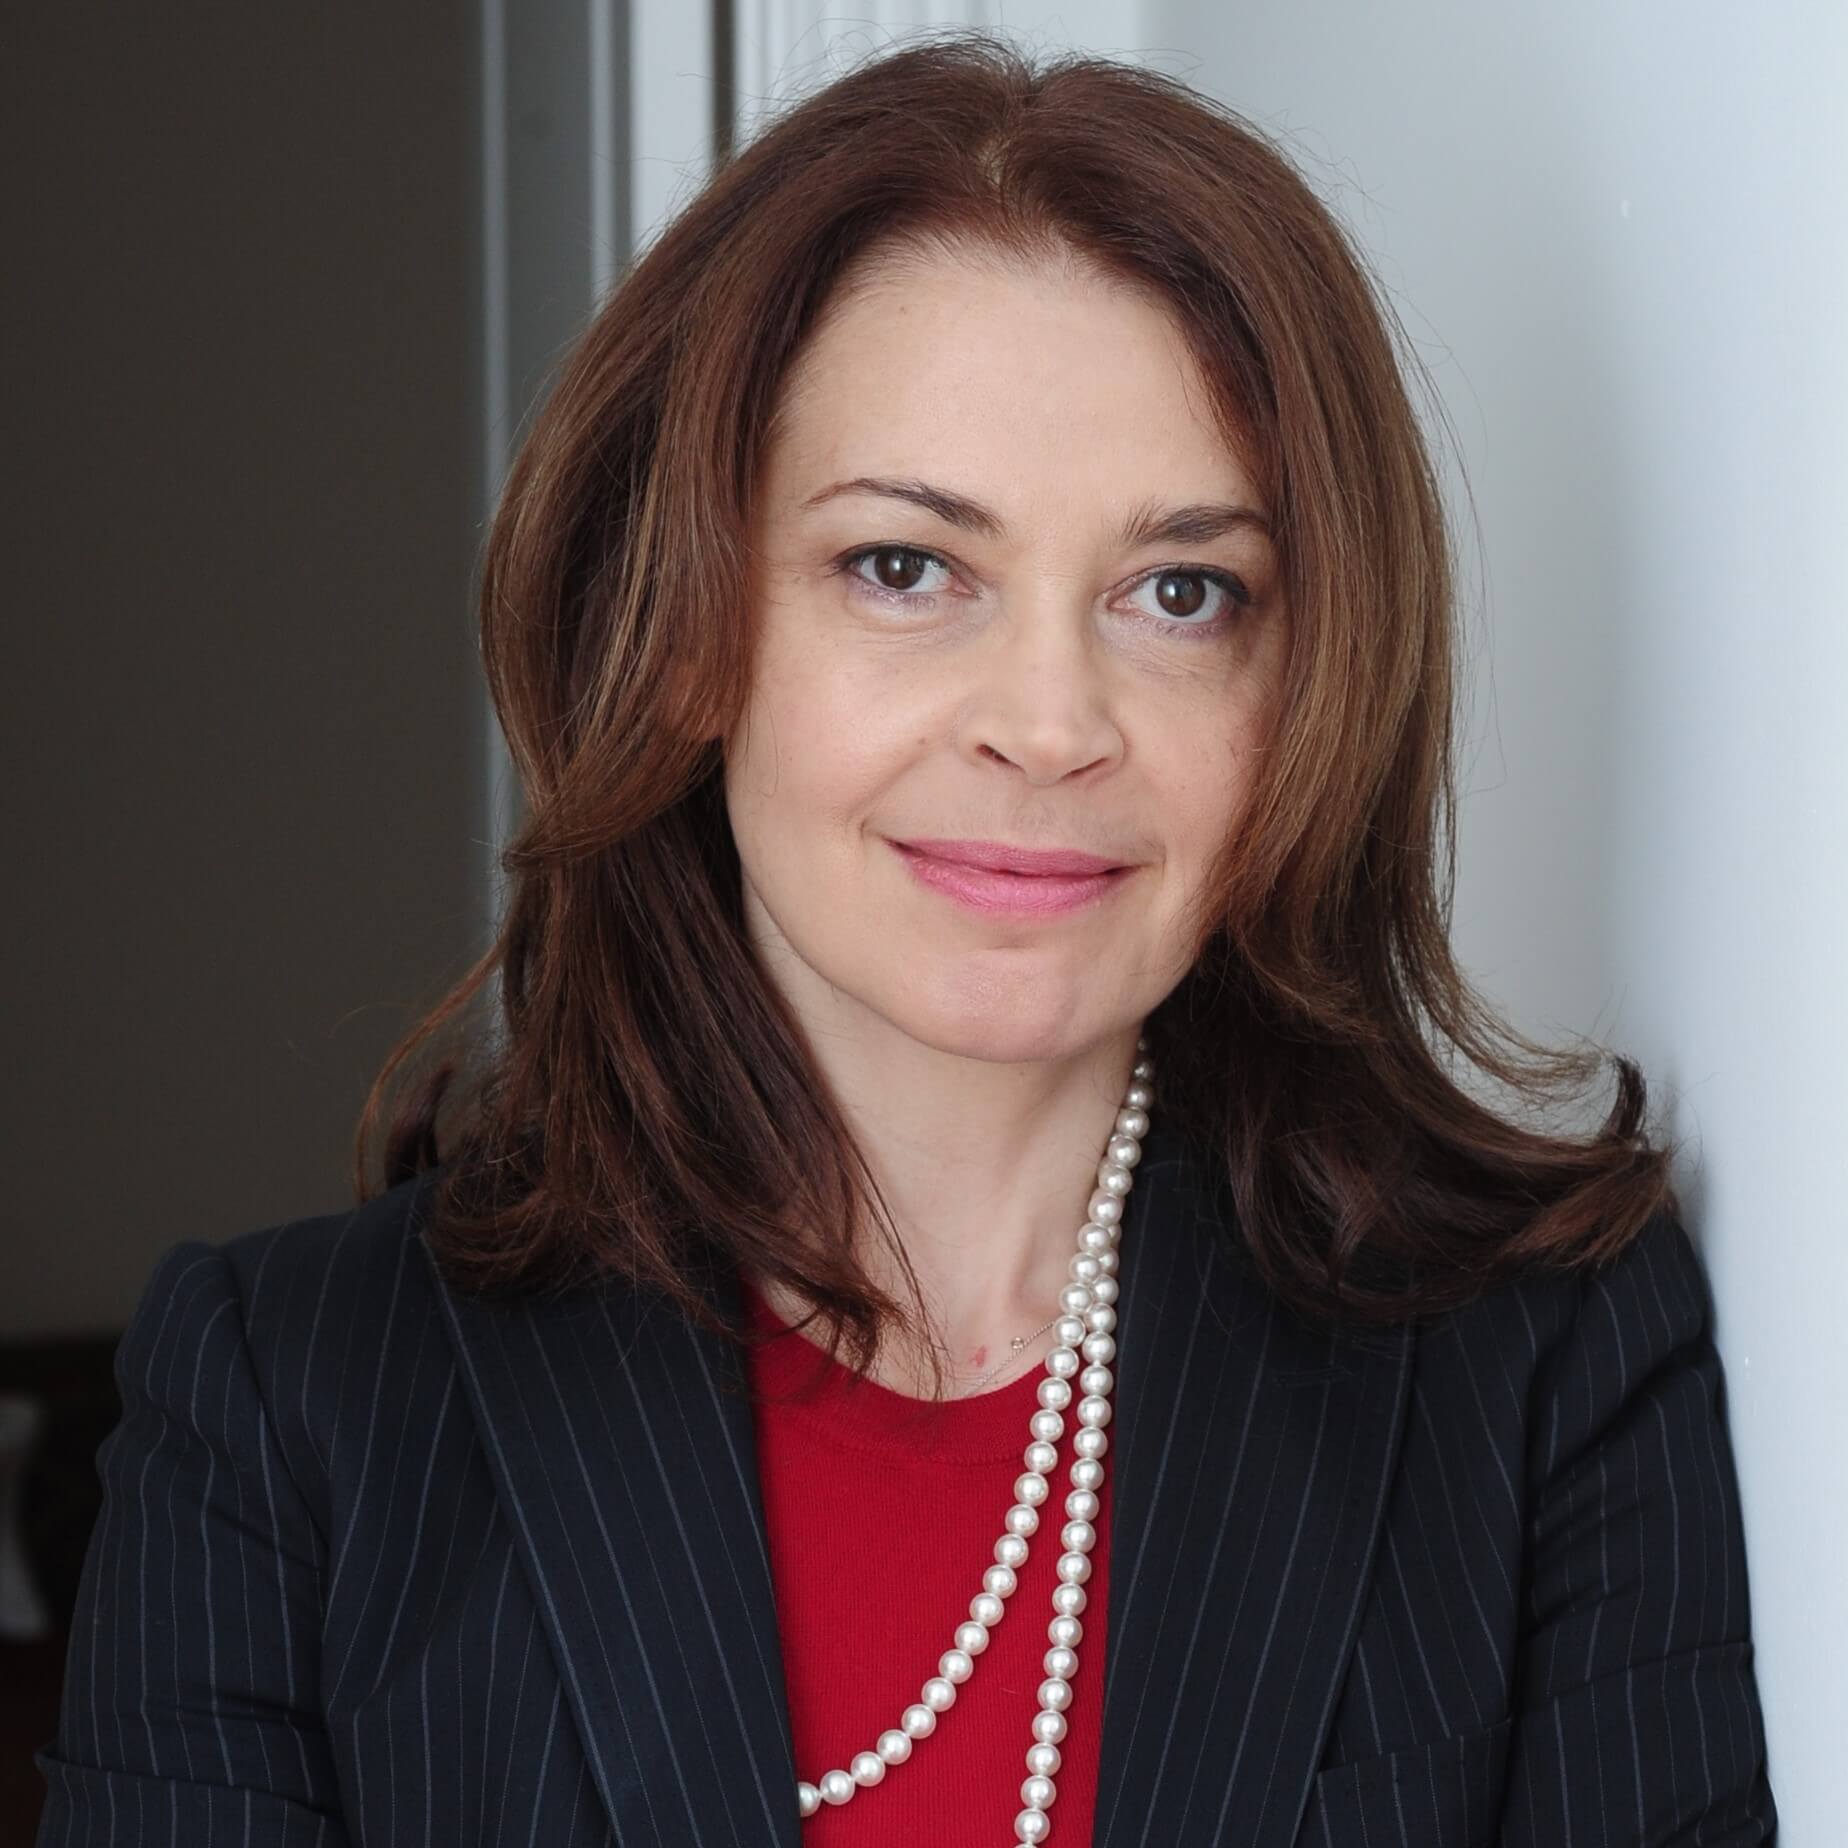 Female Lawyer in Houston Texas - Nejd Jill Yaziji